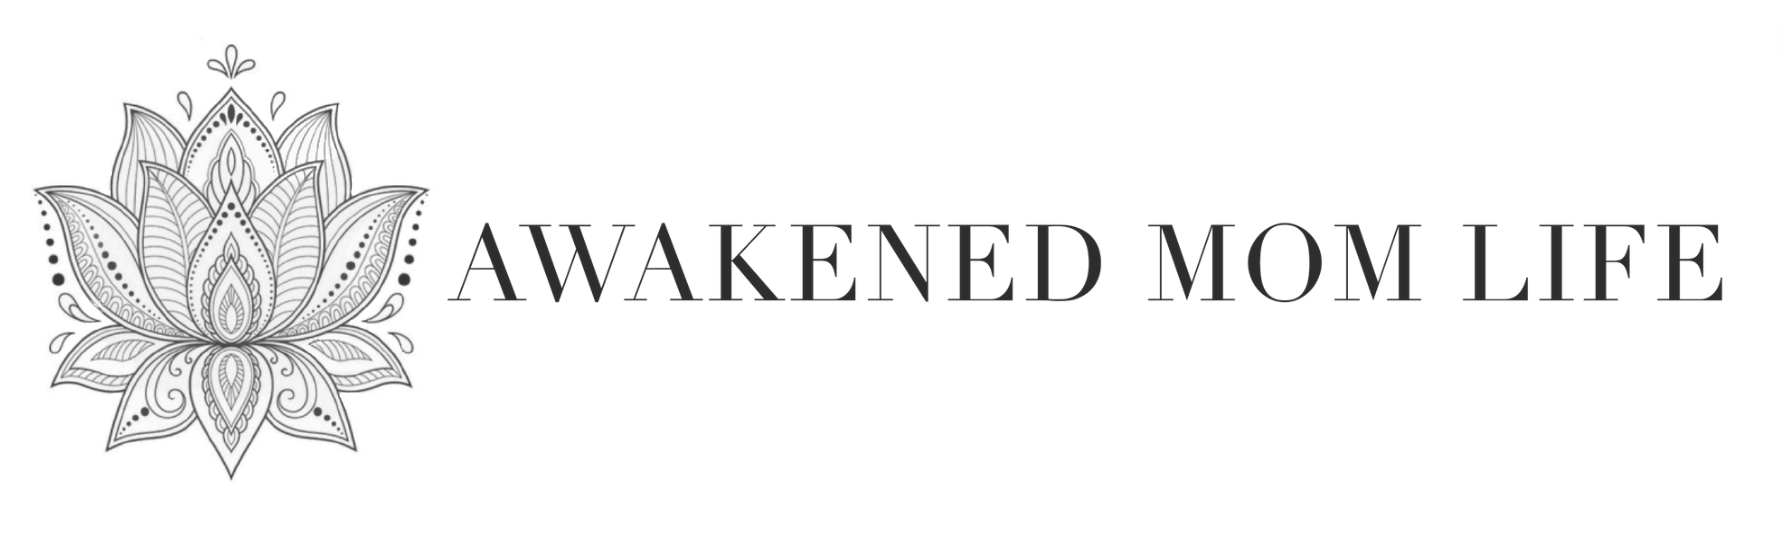 awakened mom life logo- horizontal